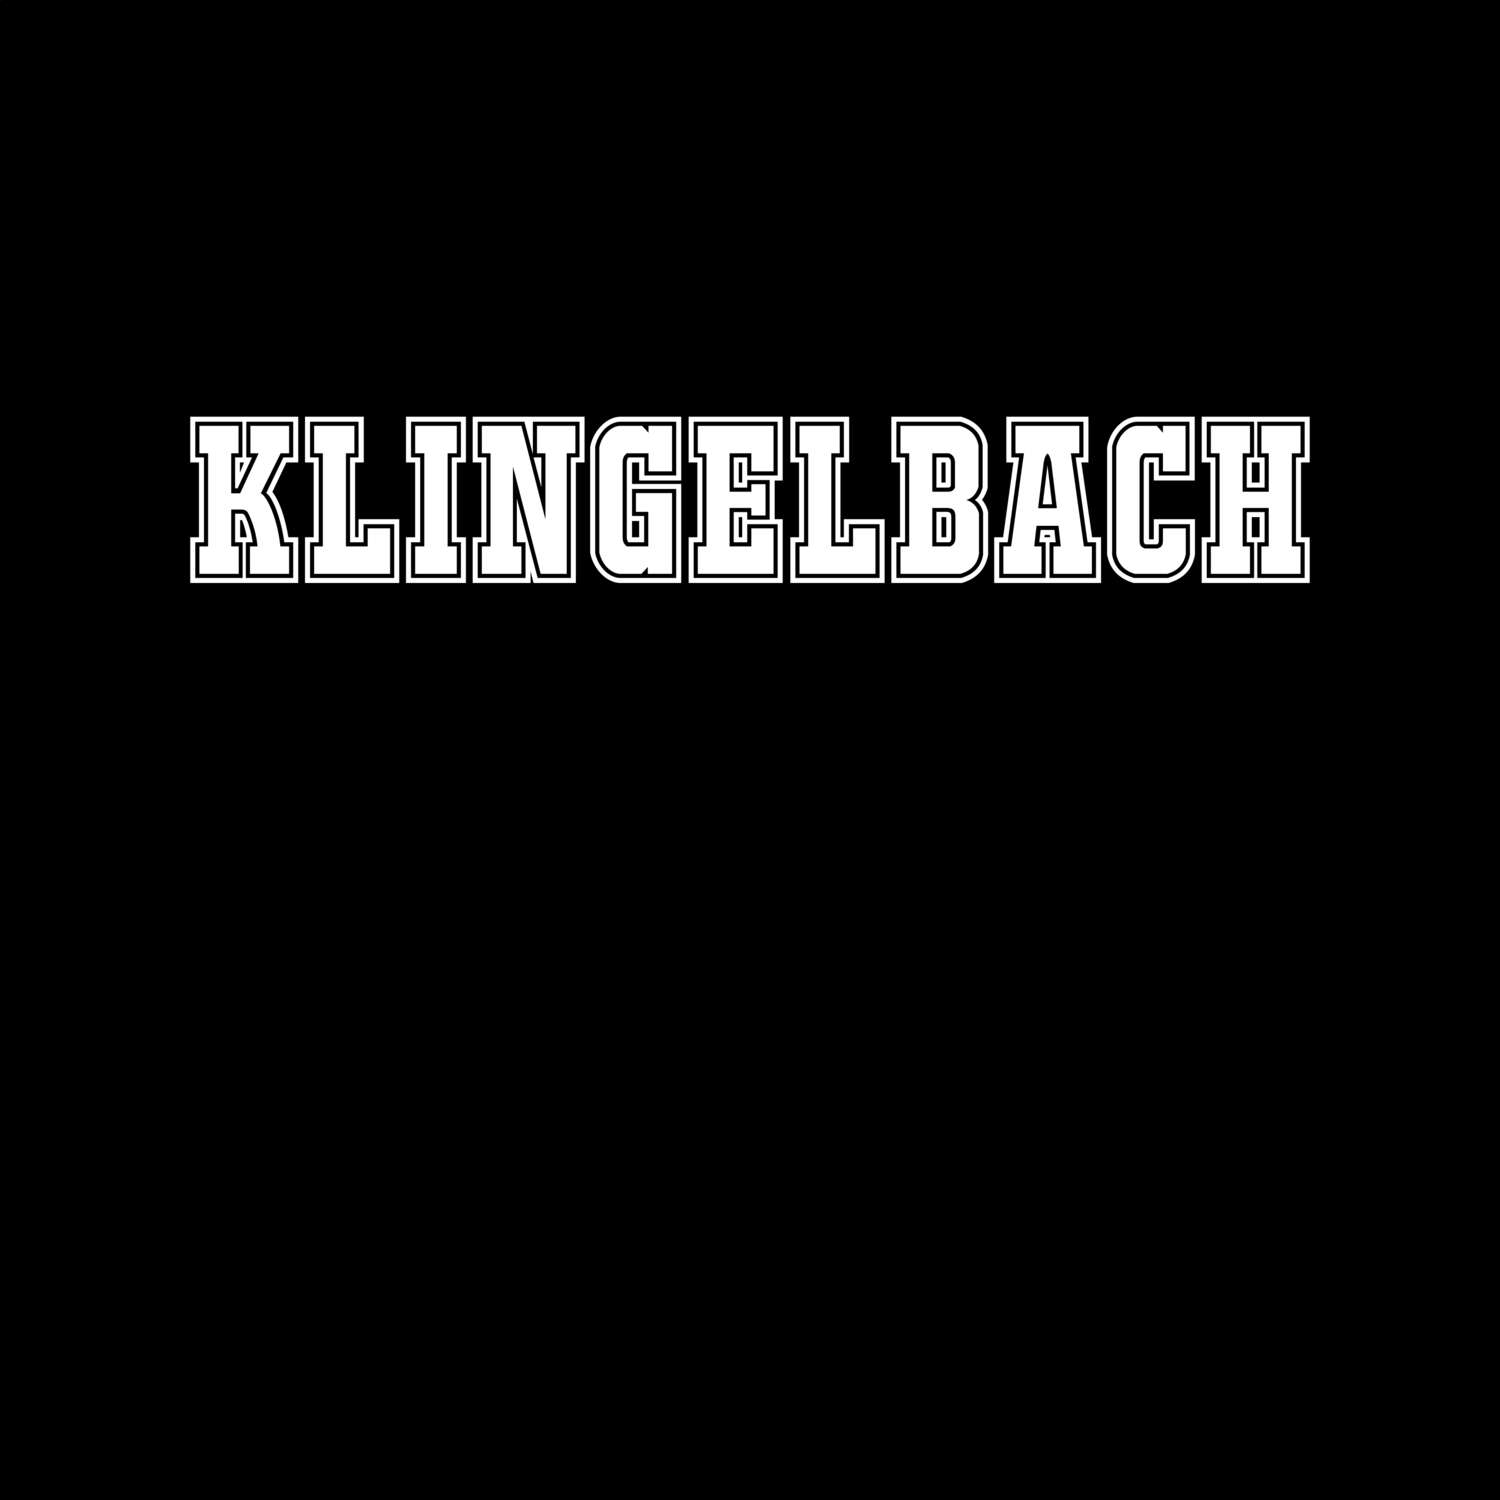 Klingelbach T-Shirt »Classic«